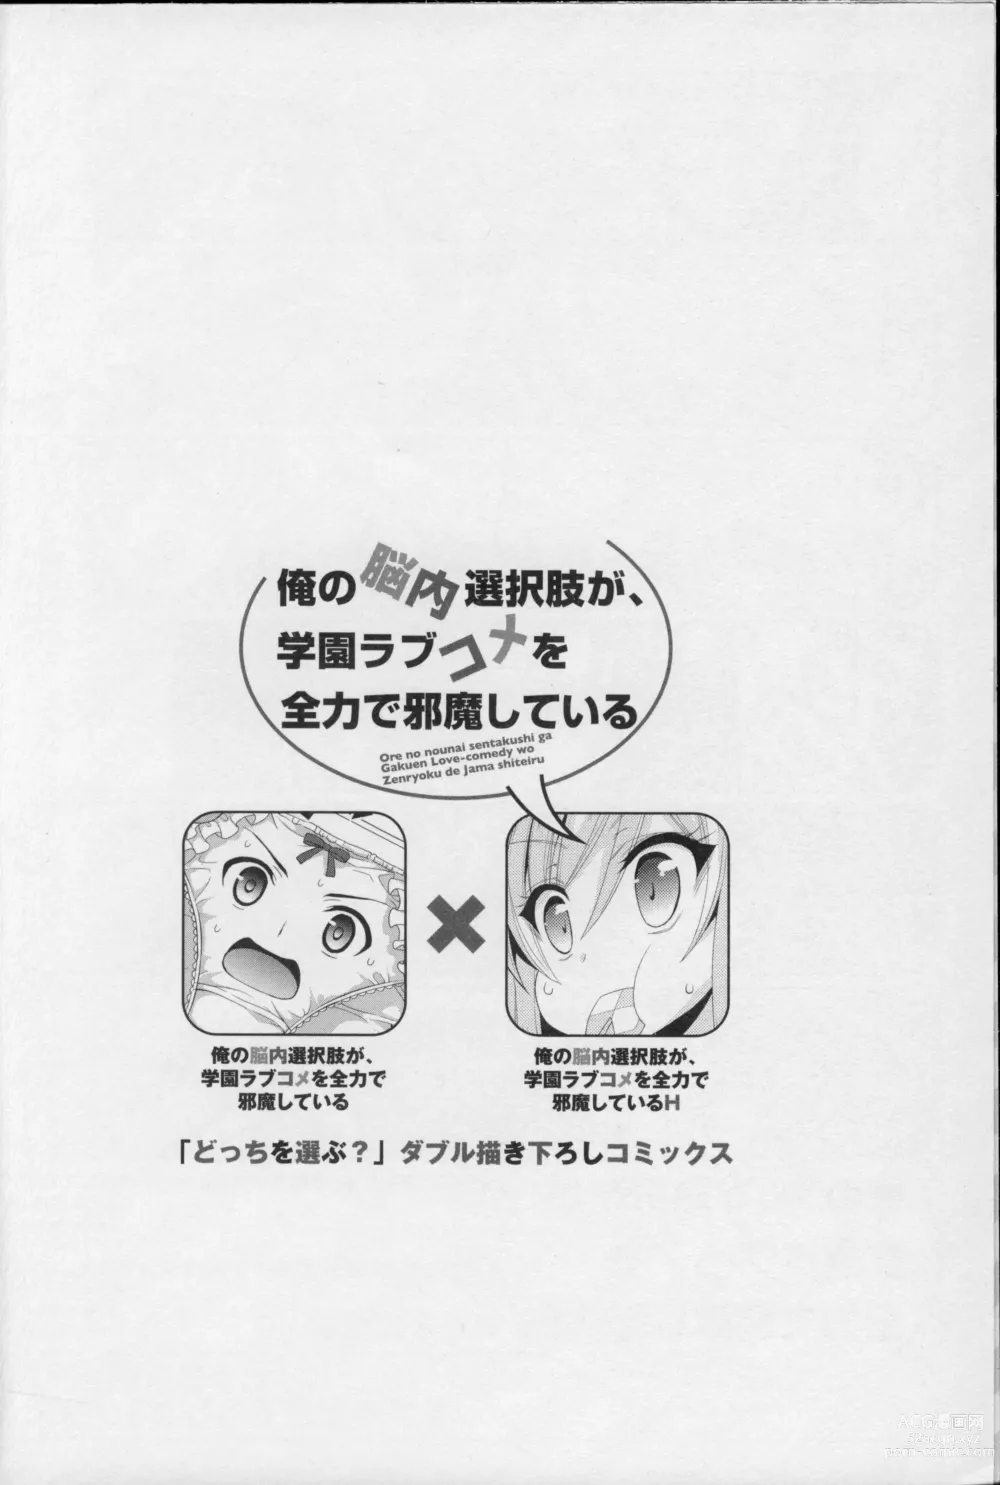 Page 5 of manga 「どっちを選ぶ?」ダブル描き下ろしコミックス Blu-ray＆DVD 第2巻 同梱特典